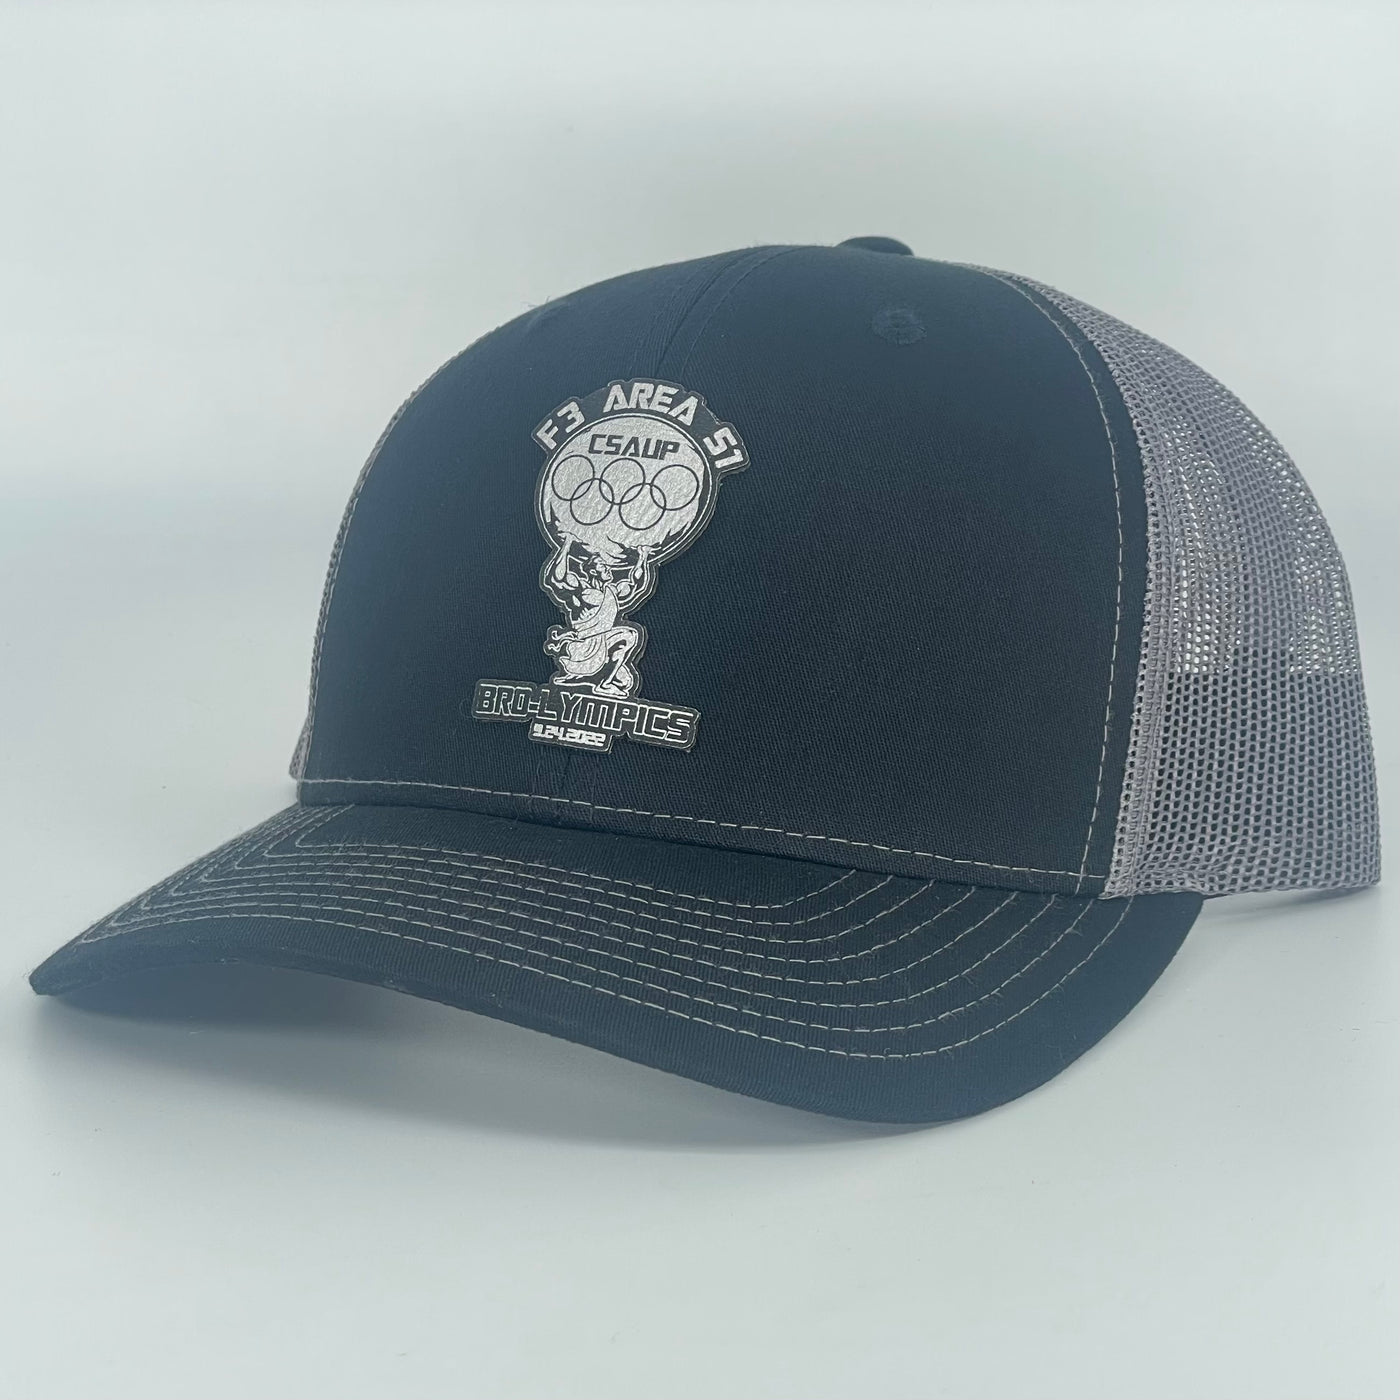 F3 Area 51 CSAUP Bro-lympics Richardson Leathertte Patch Hat Pre-Order August 2022